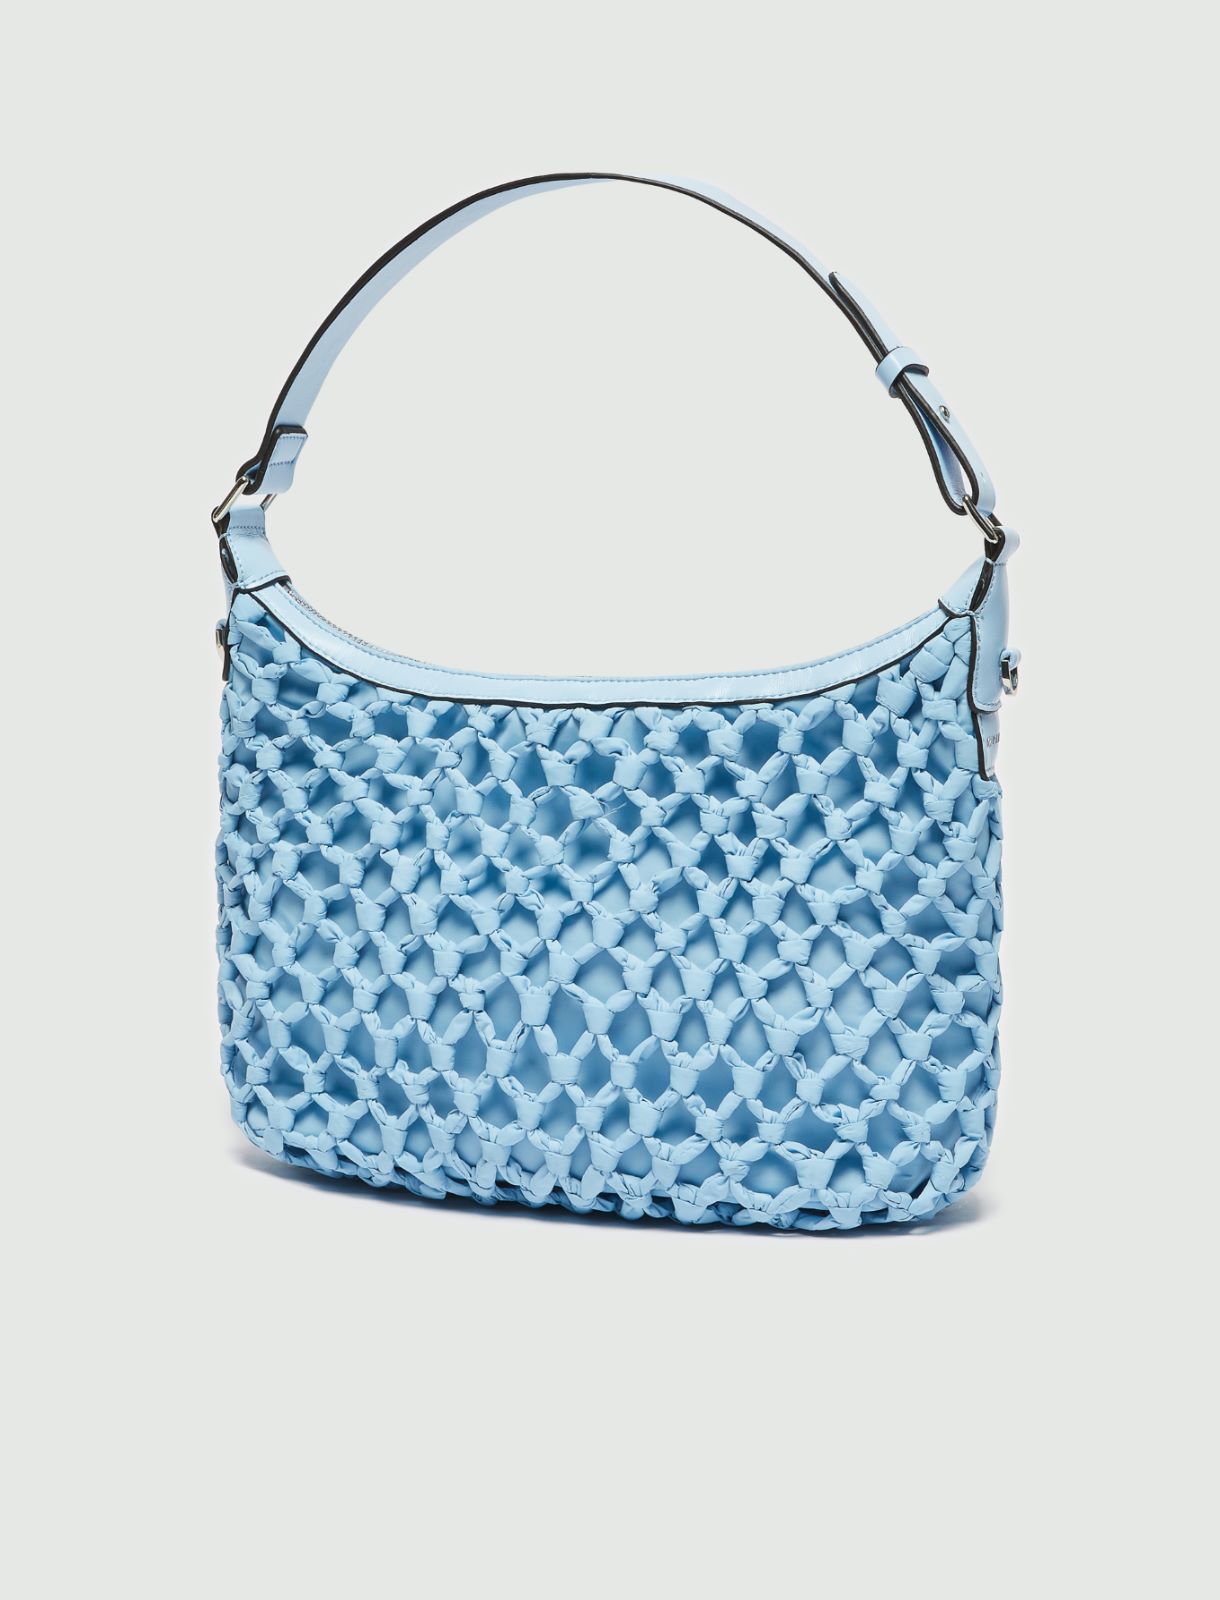 Woven bag - Light blue - Marella - 2